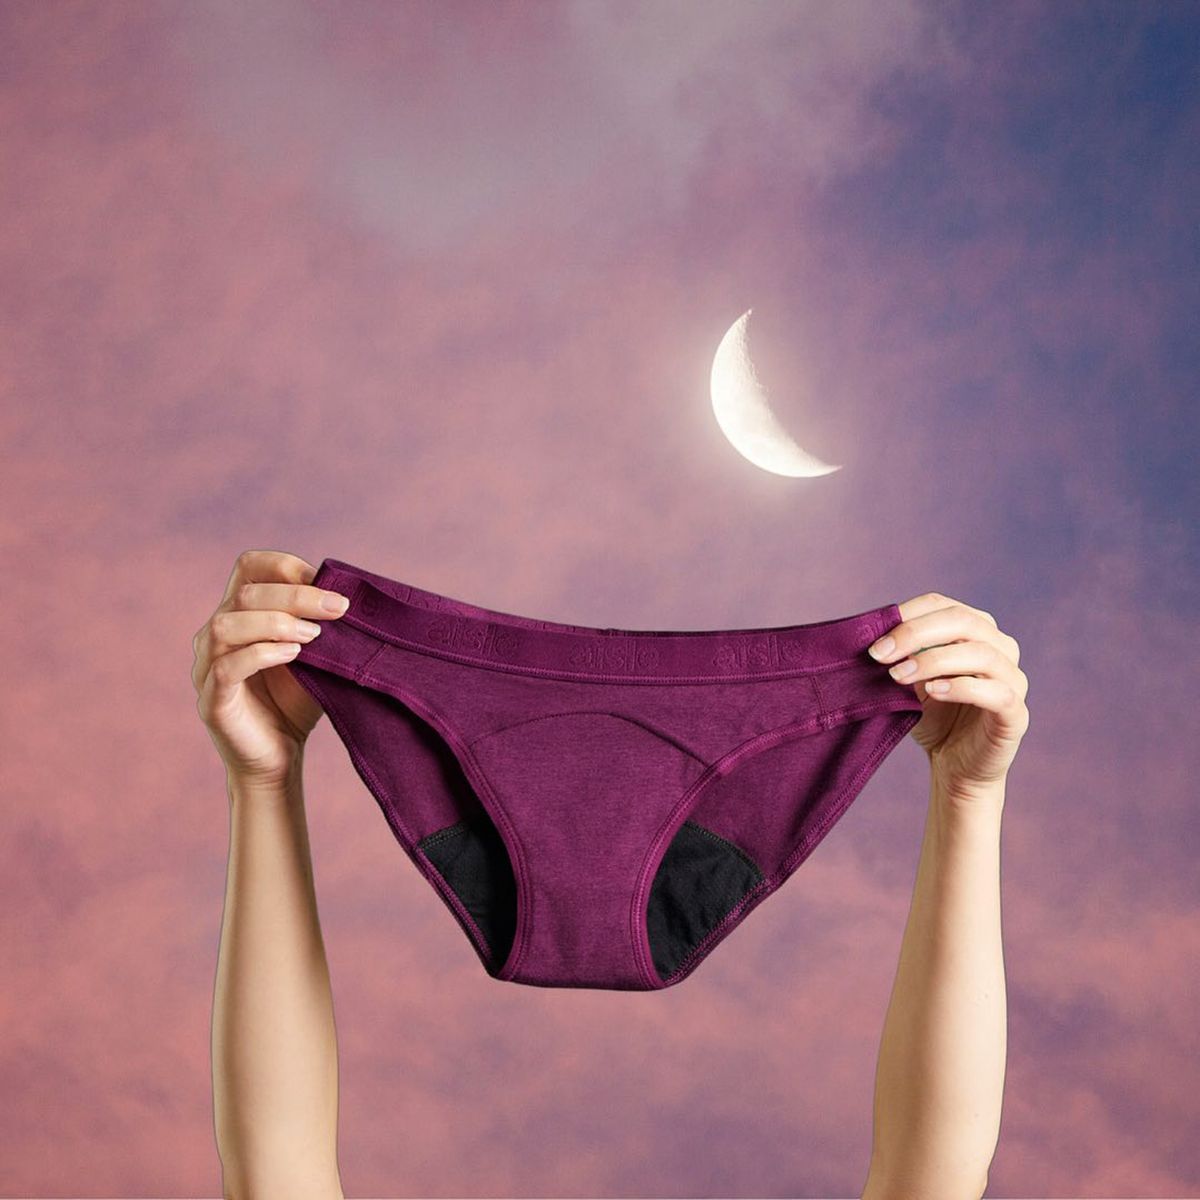 Period Underwear for Women - Leakproof Period Panties,Lace Menstrual  Underwear Breathable & Soft Briefs 